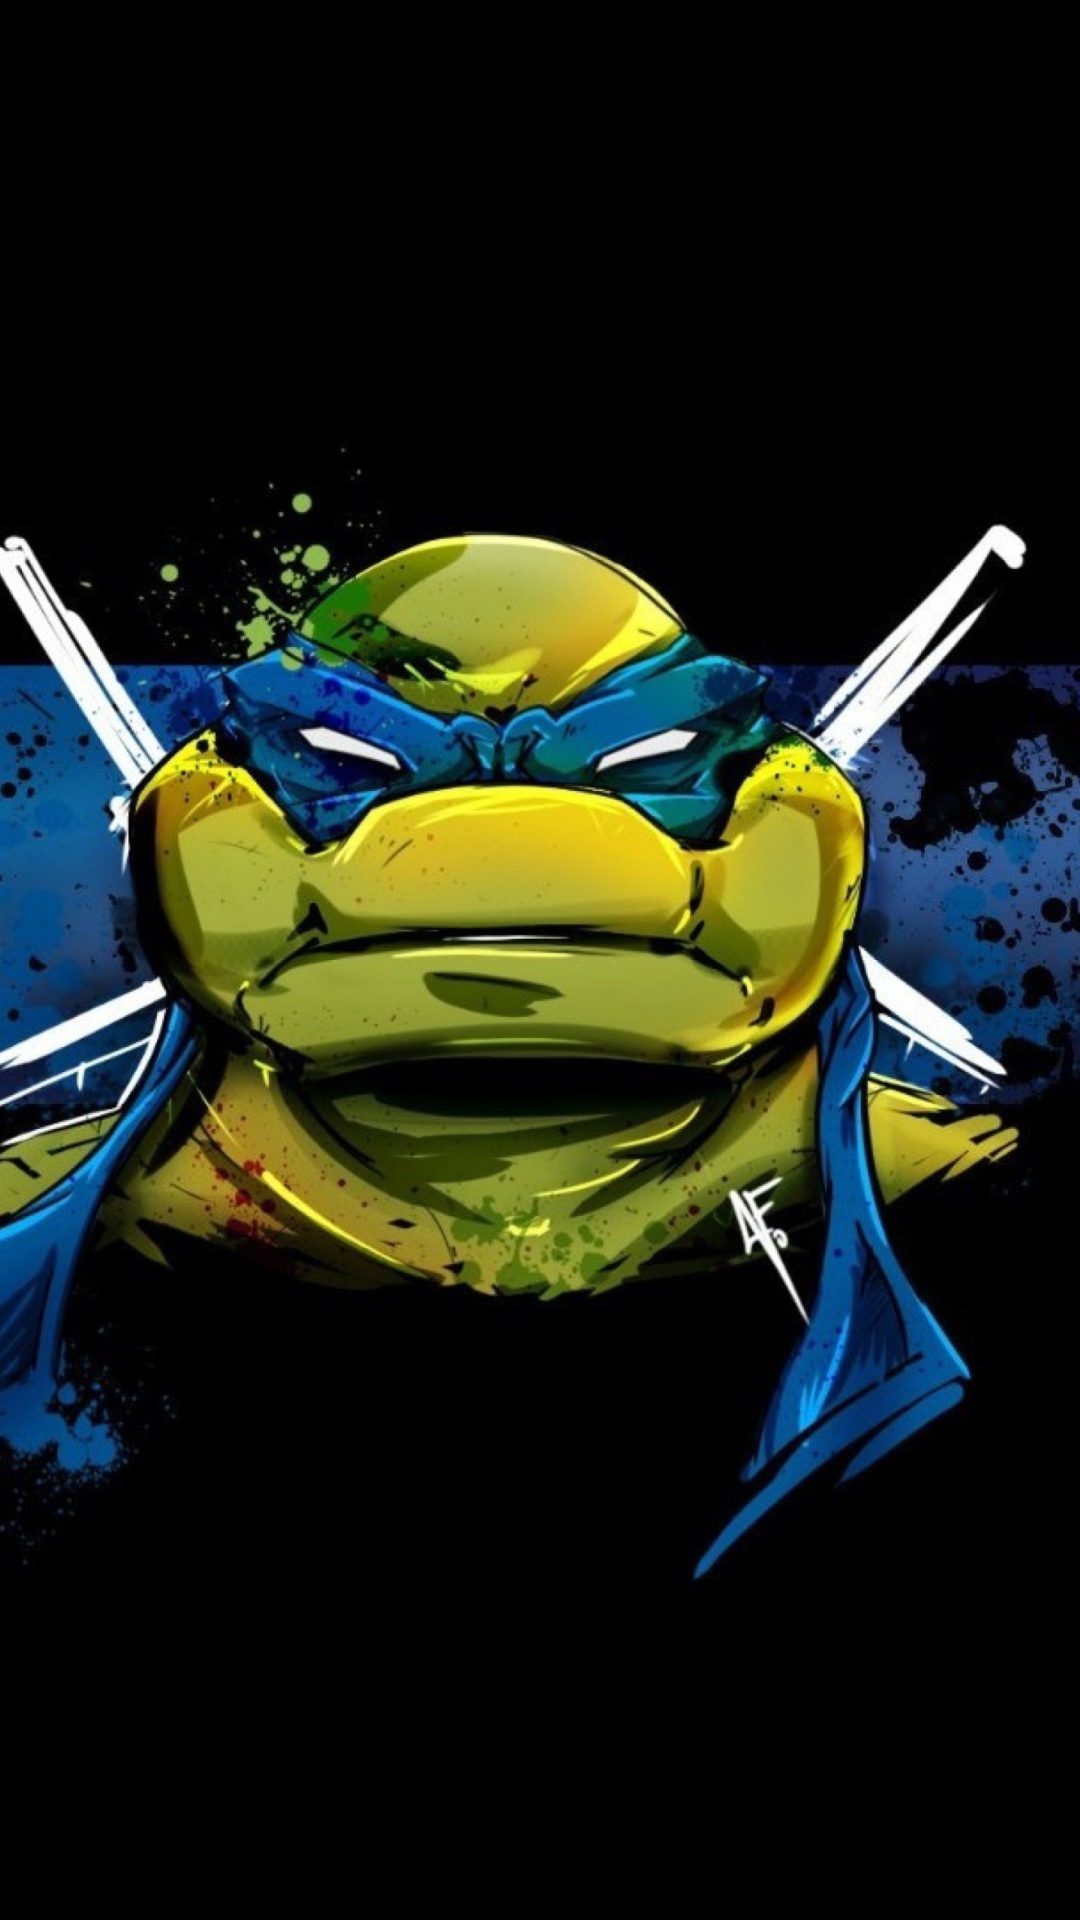 Wallpaper ID 478019  Comics Teenage Mutant Ninja Turtles Phone Wallpaper  Leonardo TMNT Michelangelo TMNT Raphael TMNT Donatello TMNT  720x1280 free download